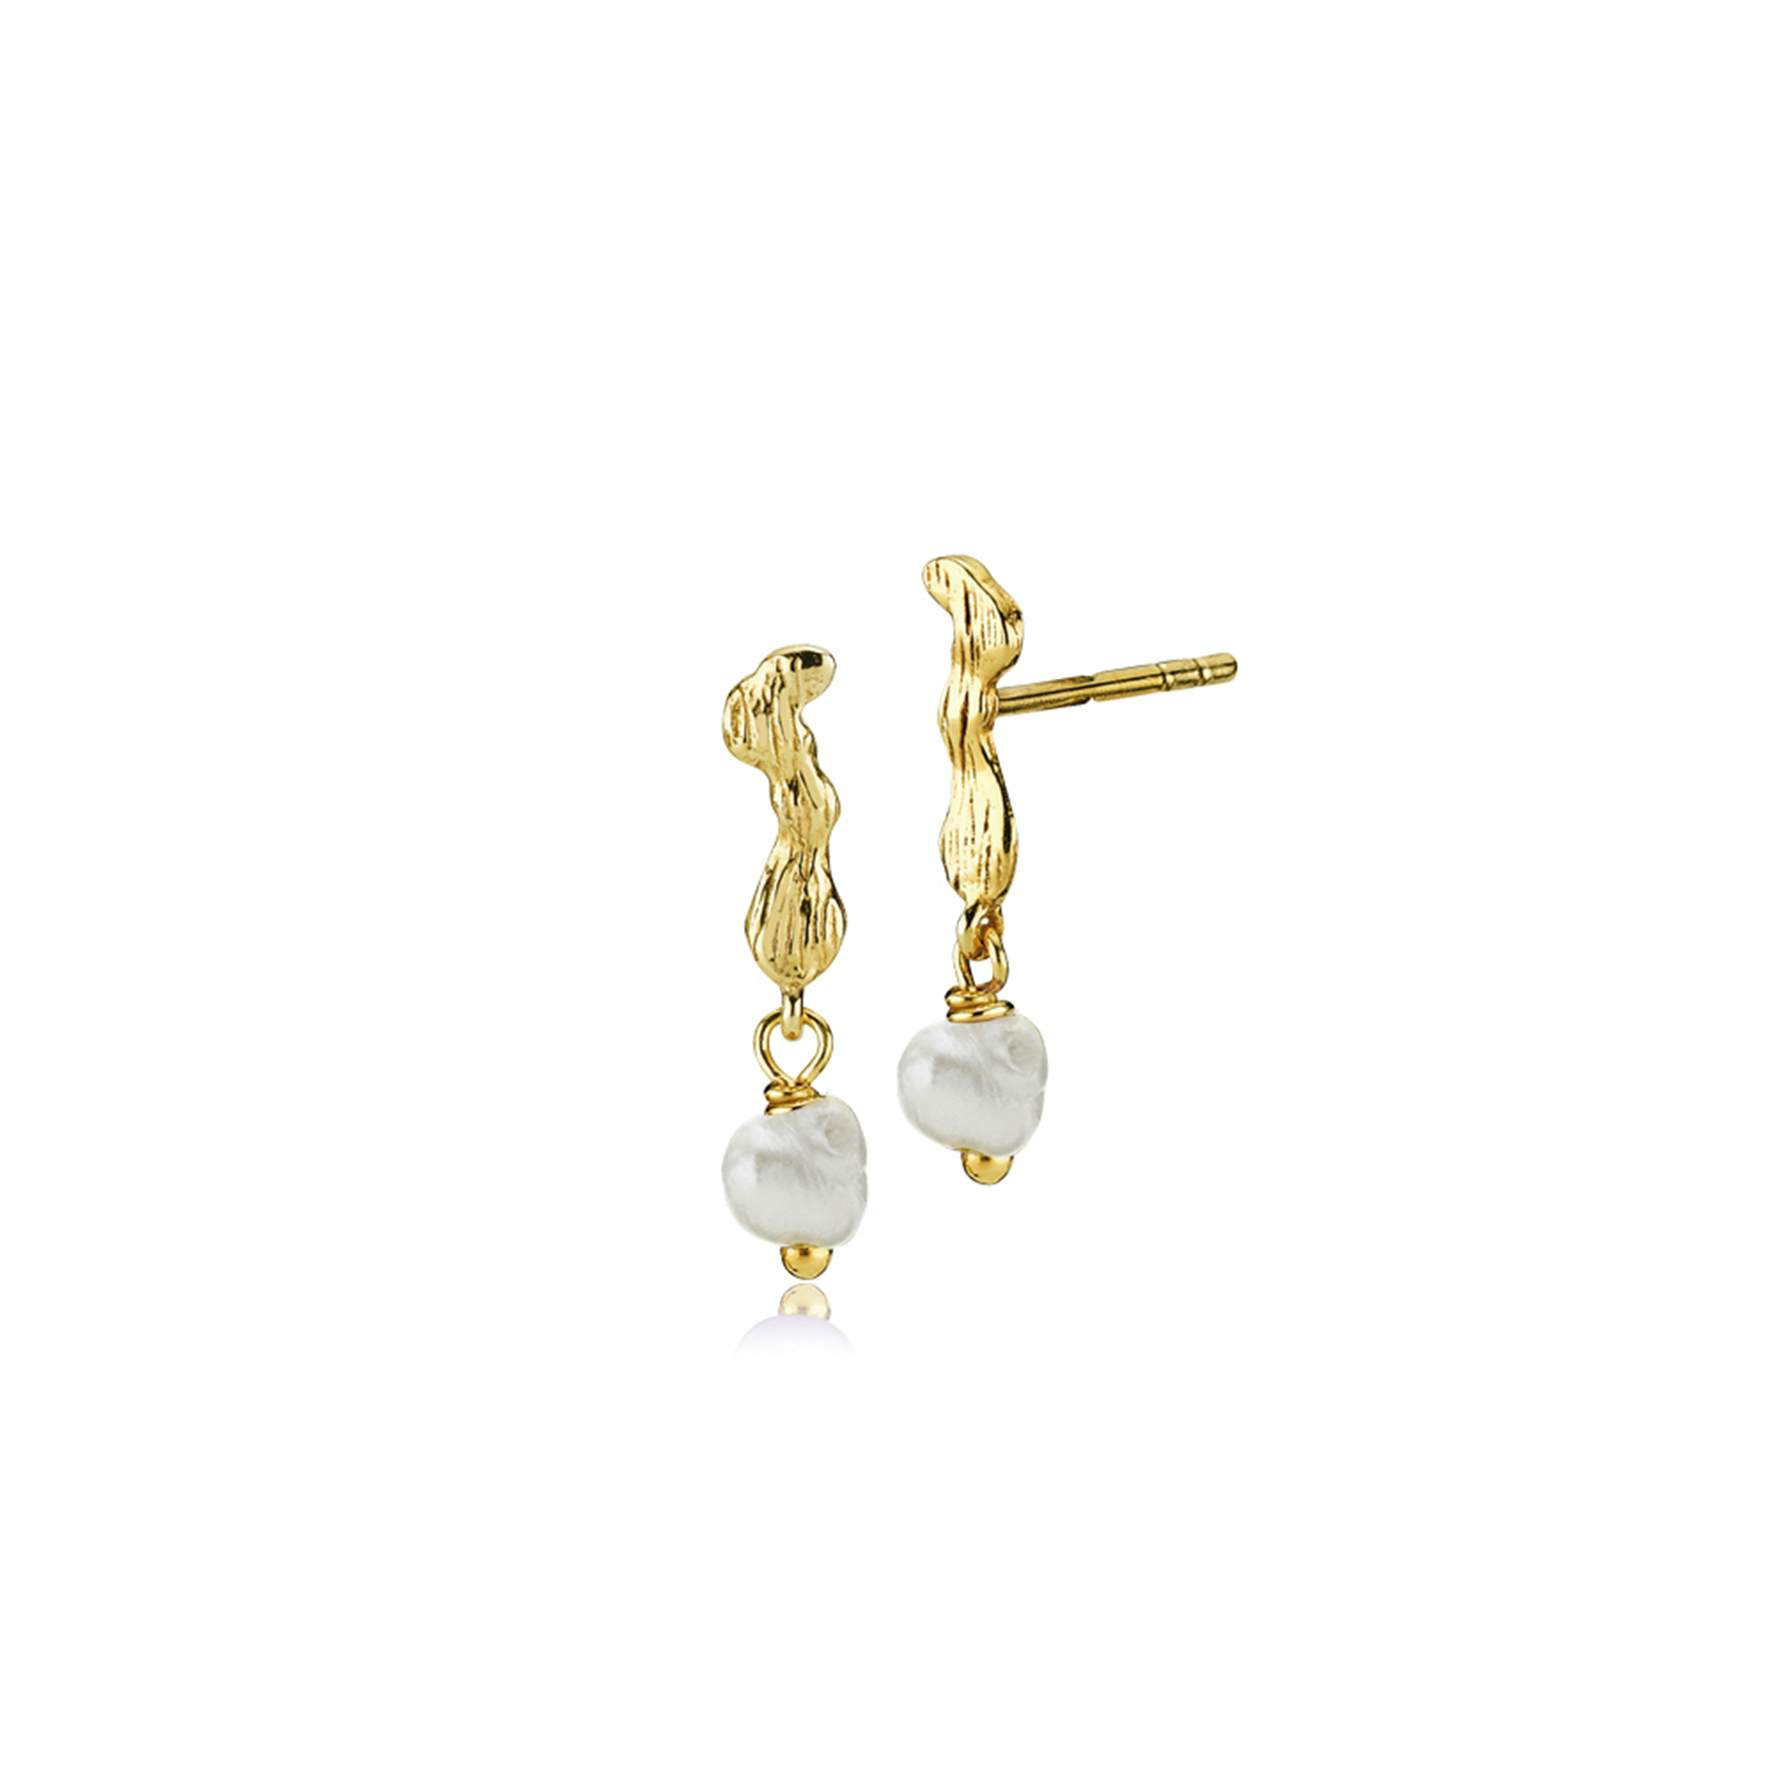 Lærke Bentsen By Sistie Earsticks With Pearls fra Sistie i Forgyldt-Sølv Sterling 925|Freshwater Pearl